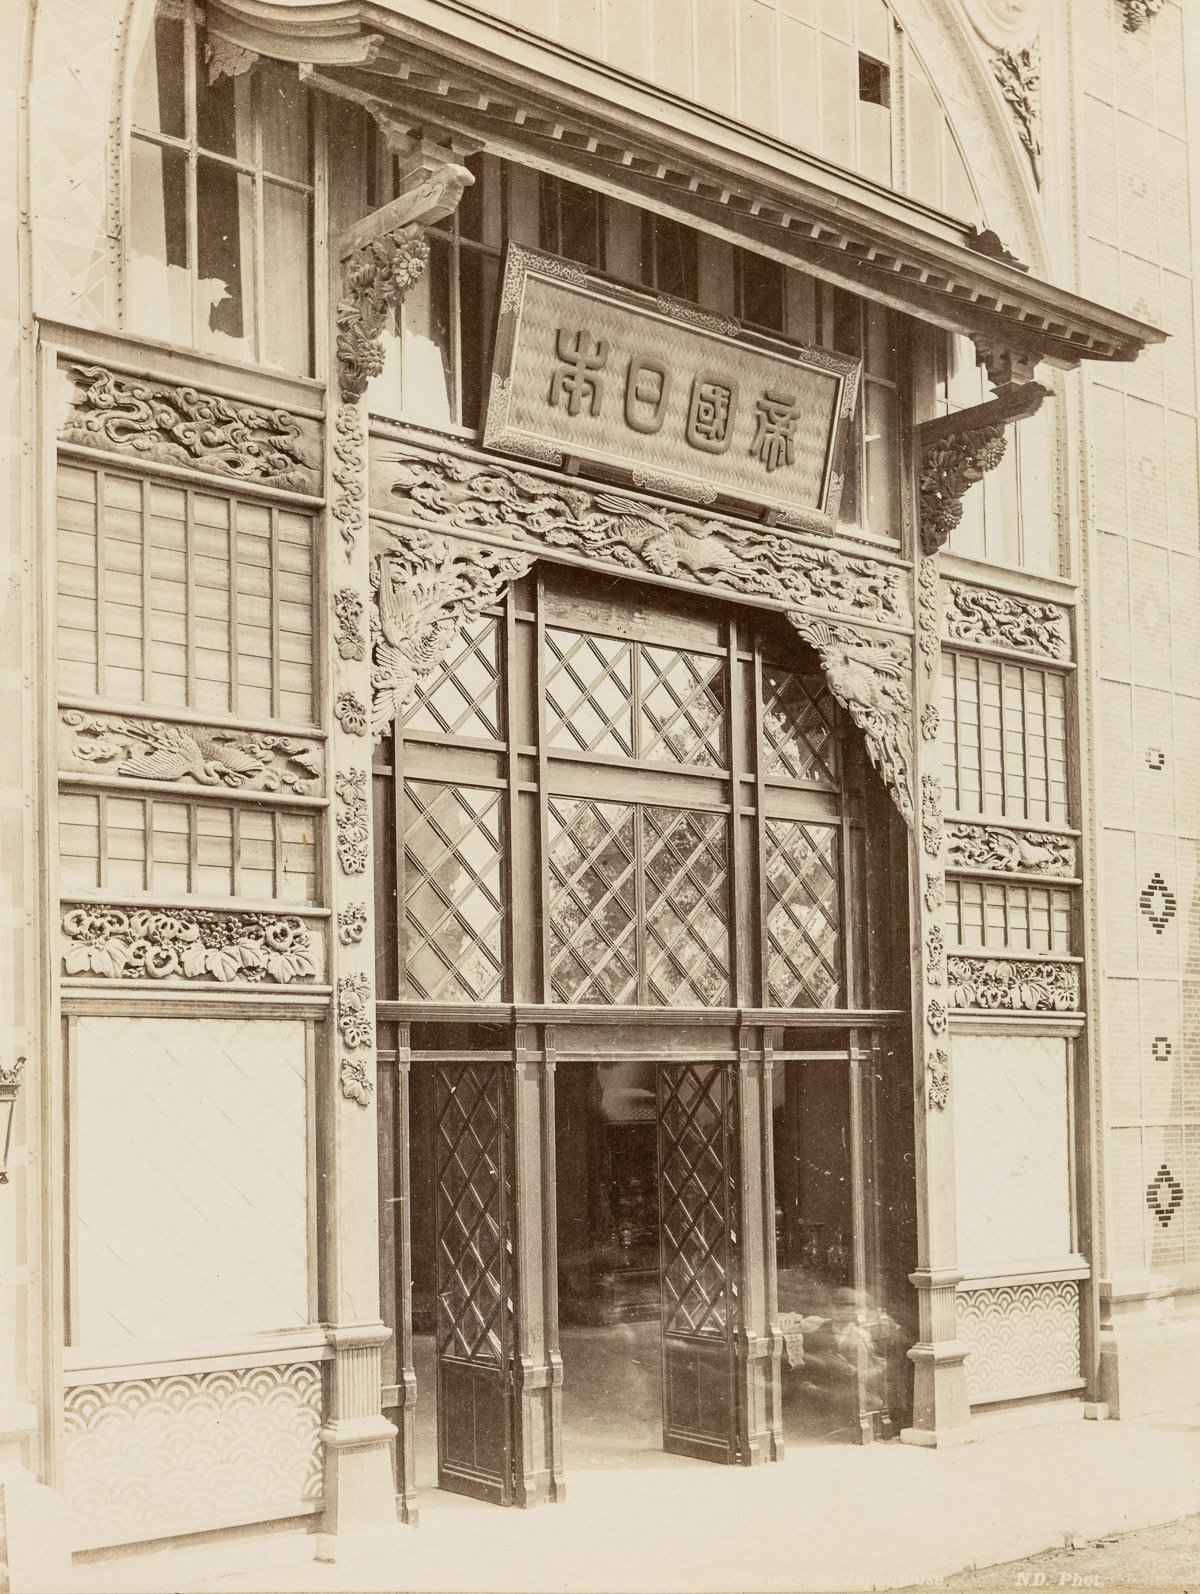 The Japanese pavilion